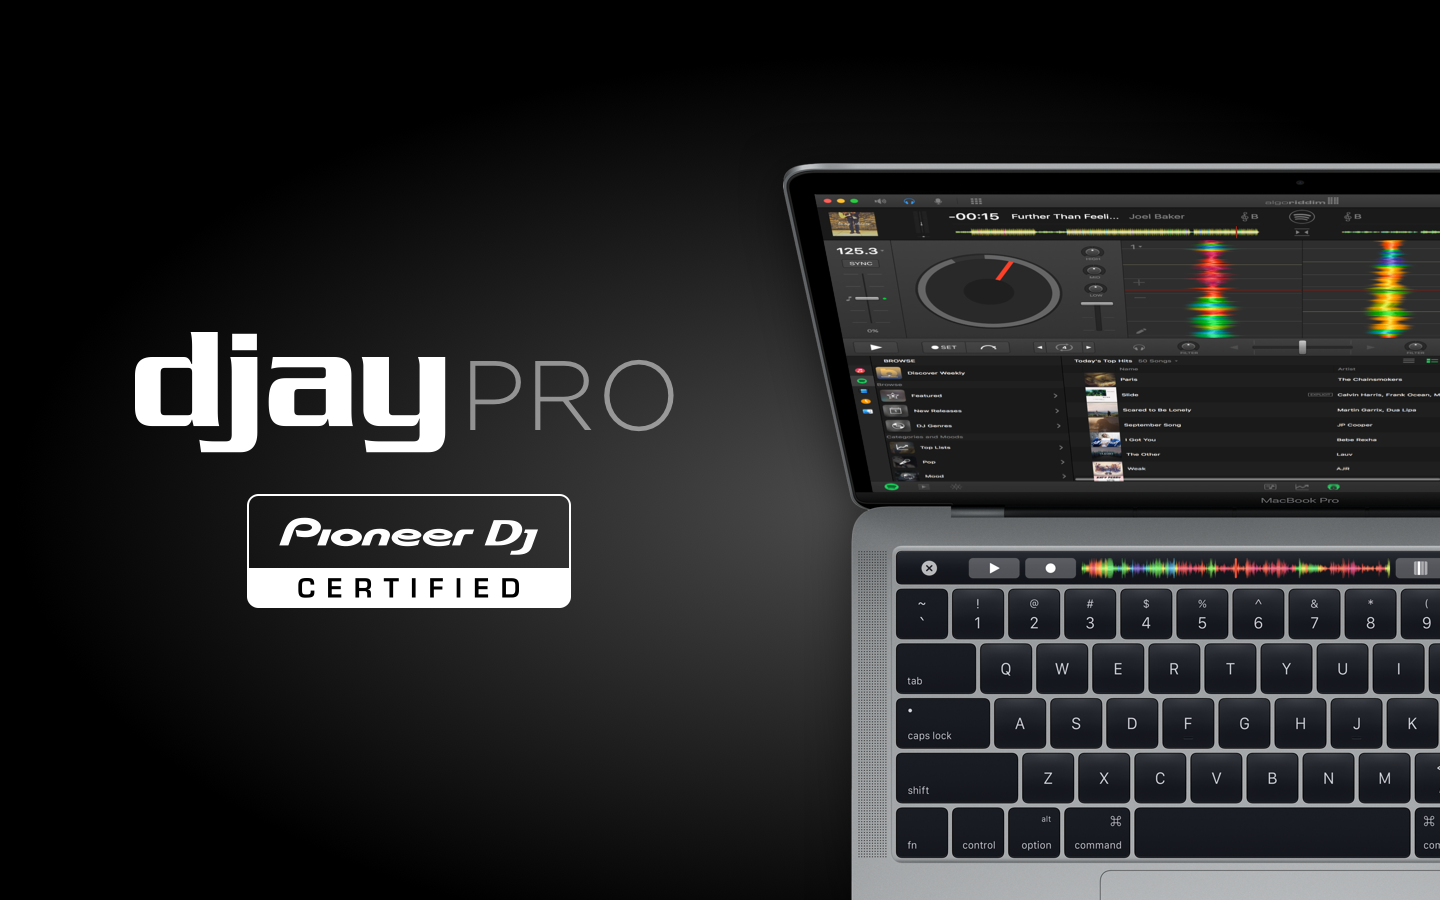 djay Pro - Pioneer DJ certified